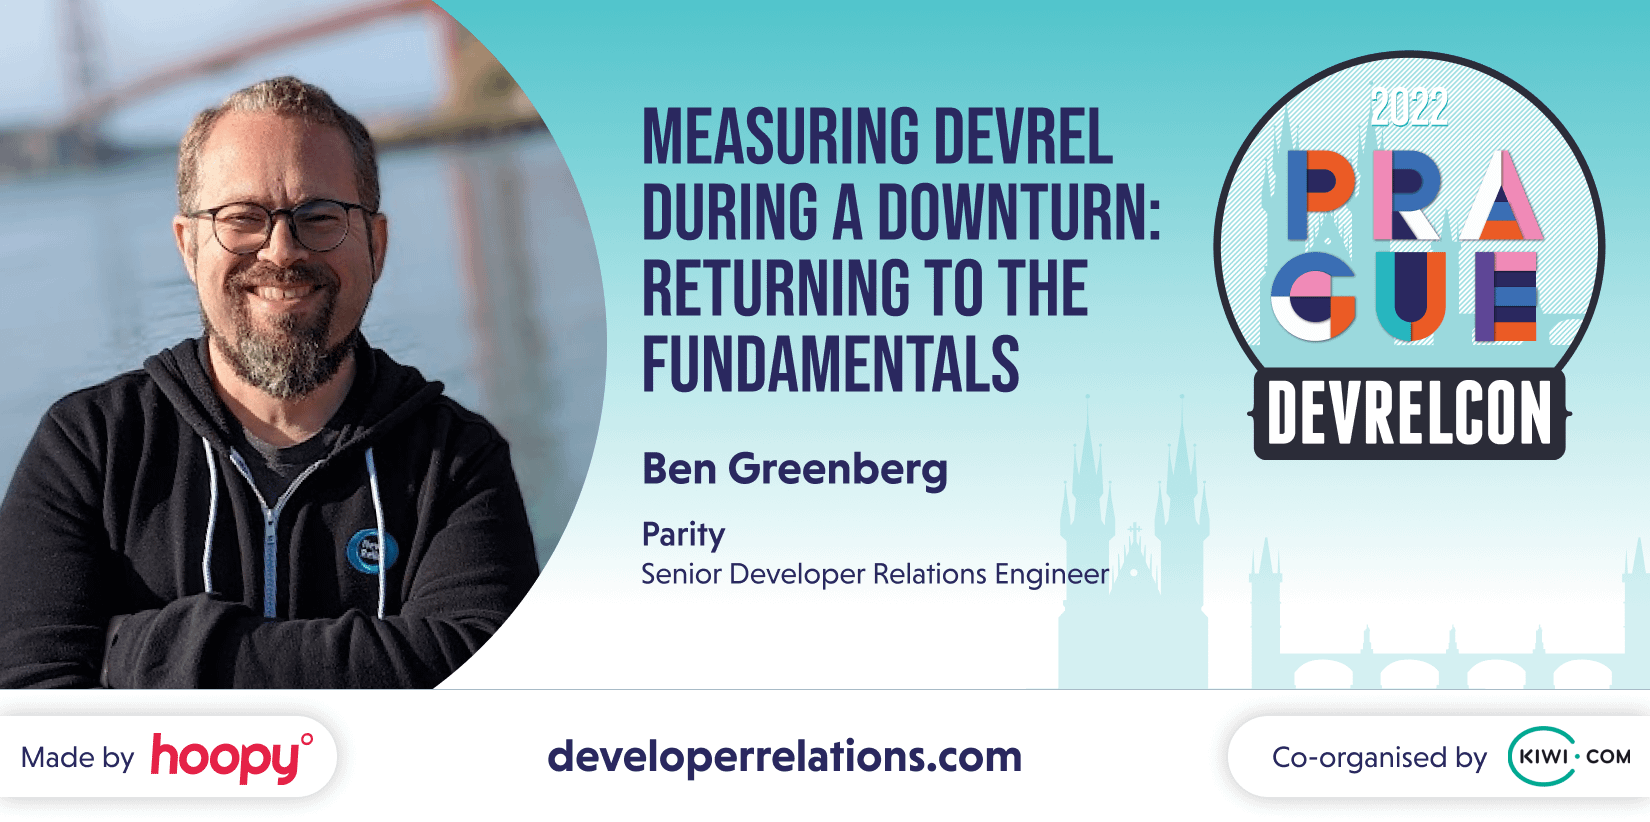 Measuring DevRel During a Downturn. Ben Greenberg's talk at DevRelCon Prague